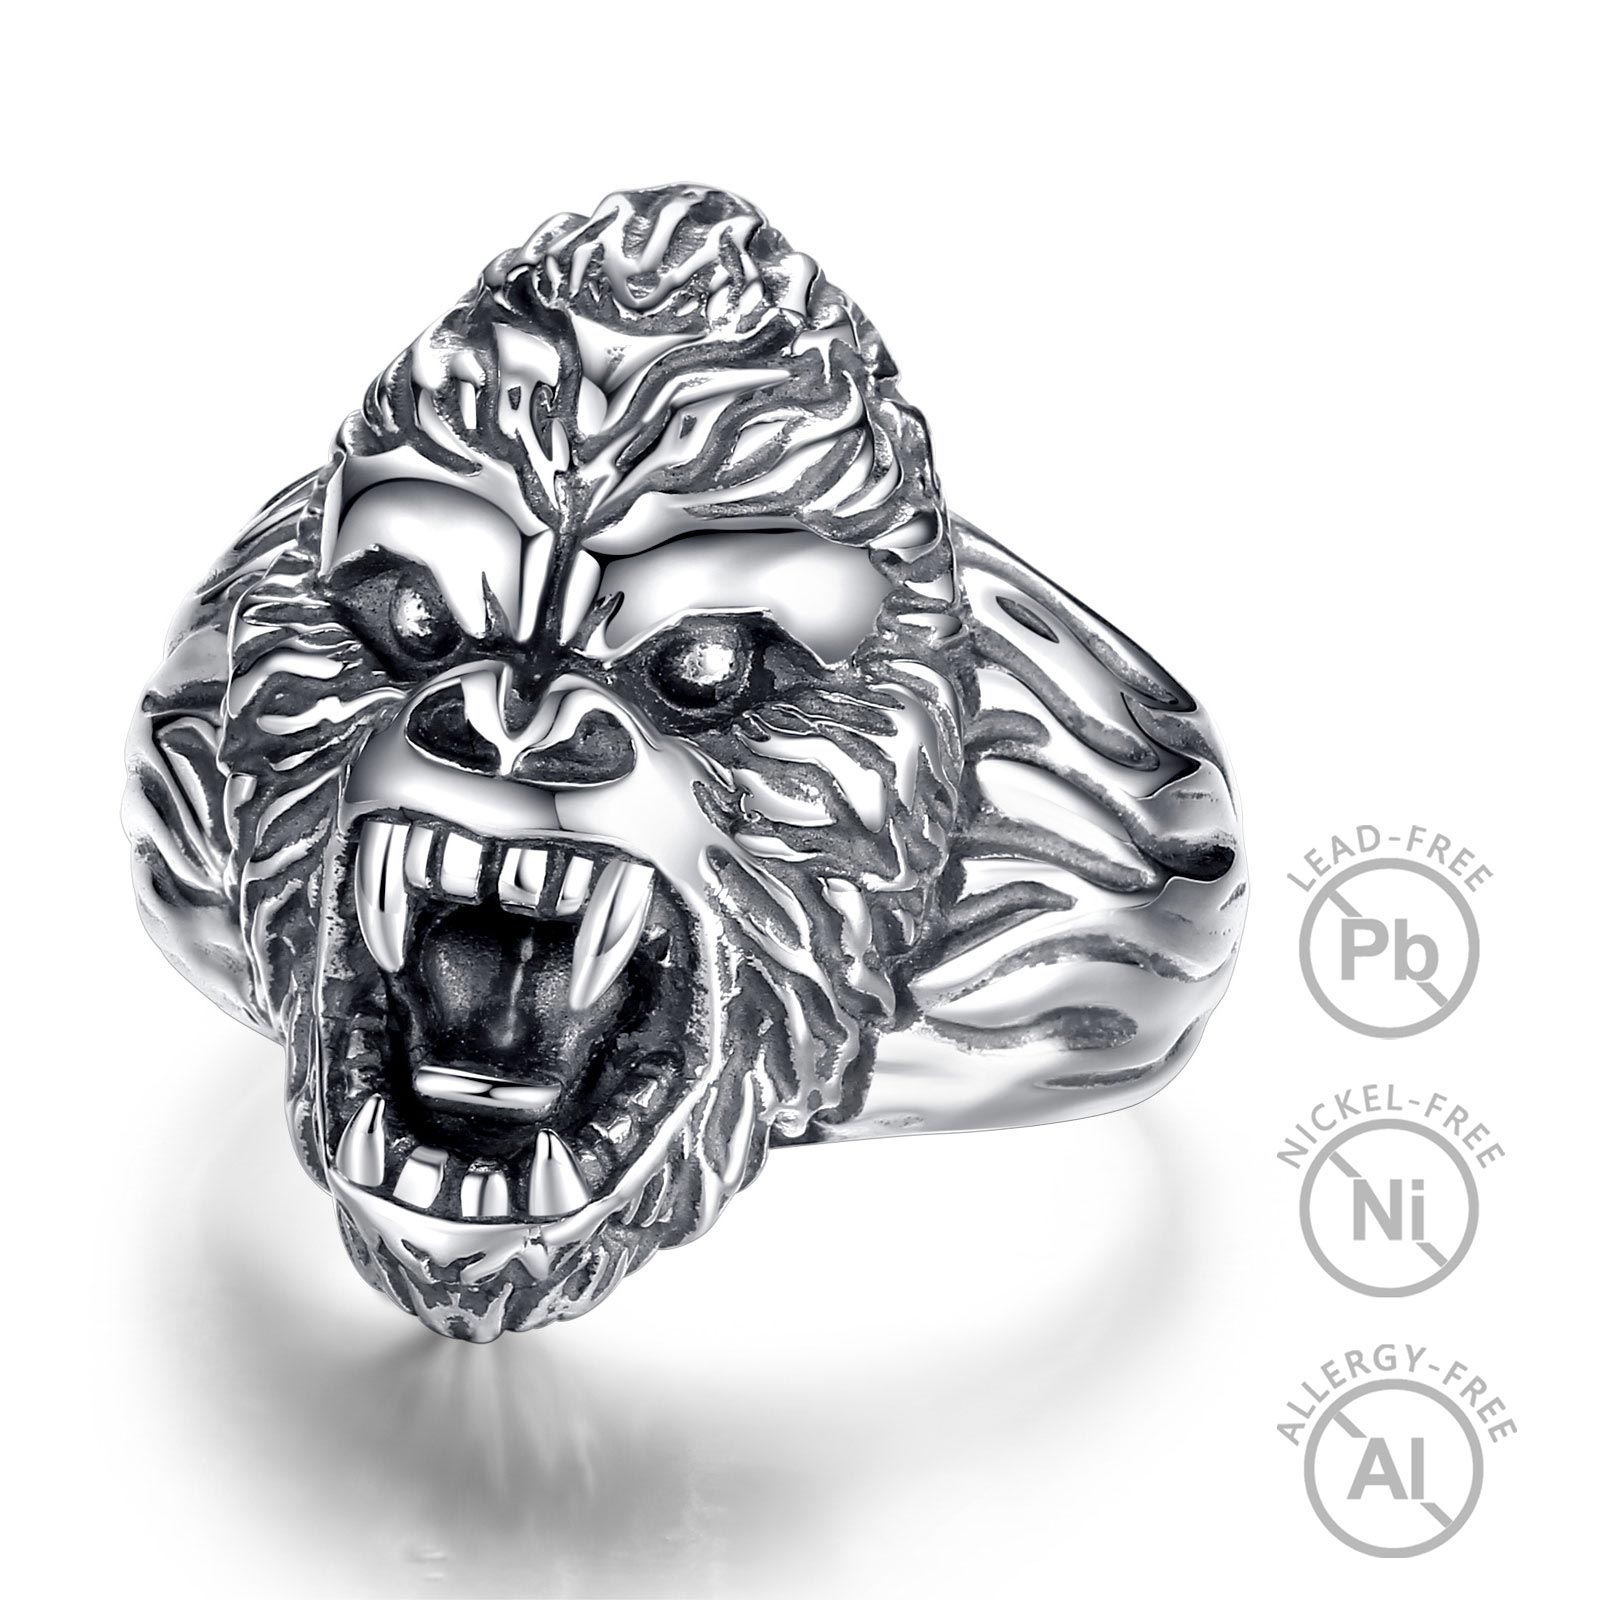 Merryshine Jewelry Wholesale Fashion 925 Sterling Silver Orangutans Monkey Design Adjustable Finger Rings for Women or Men